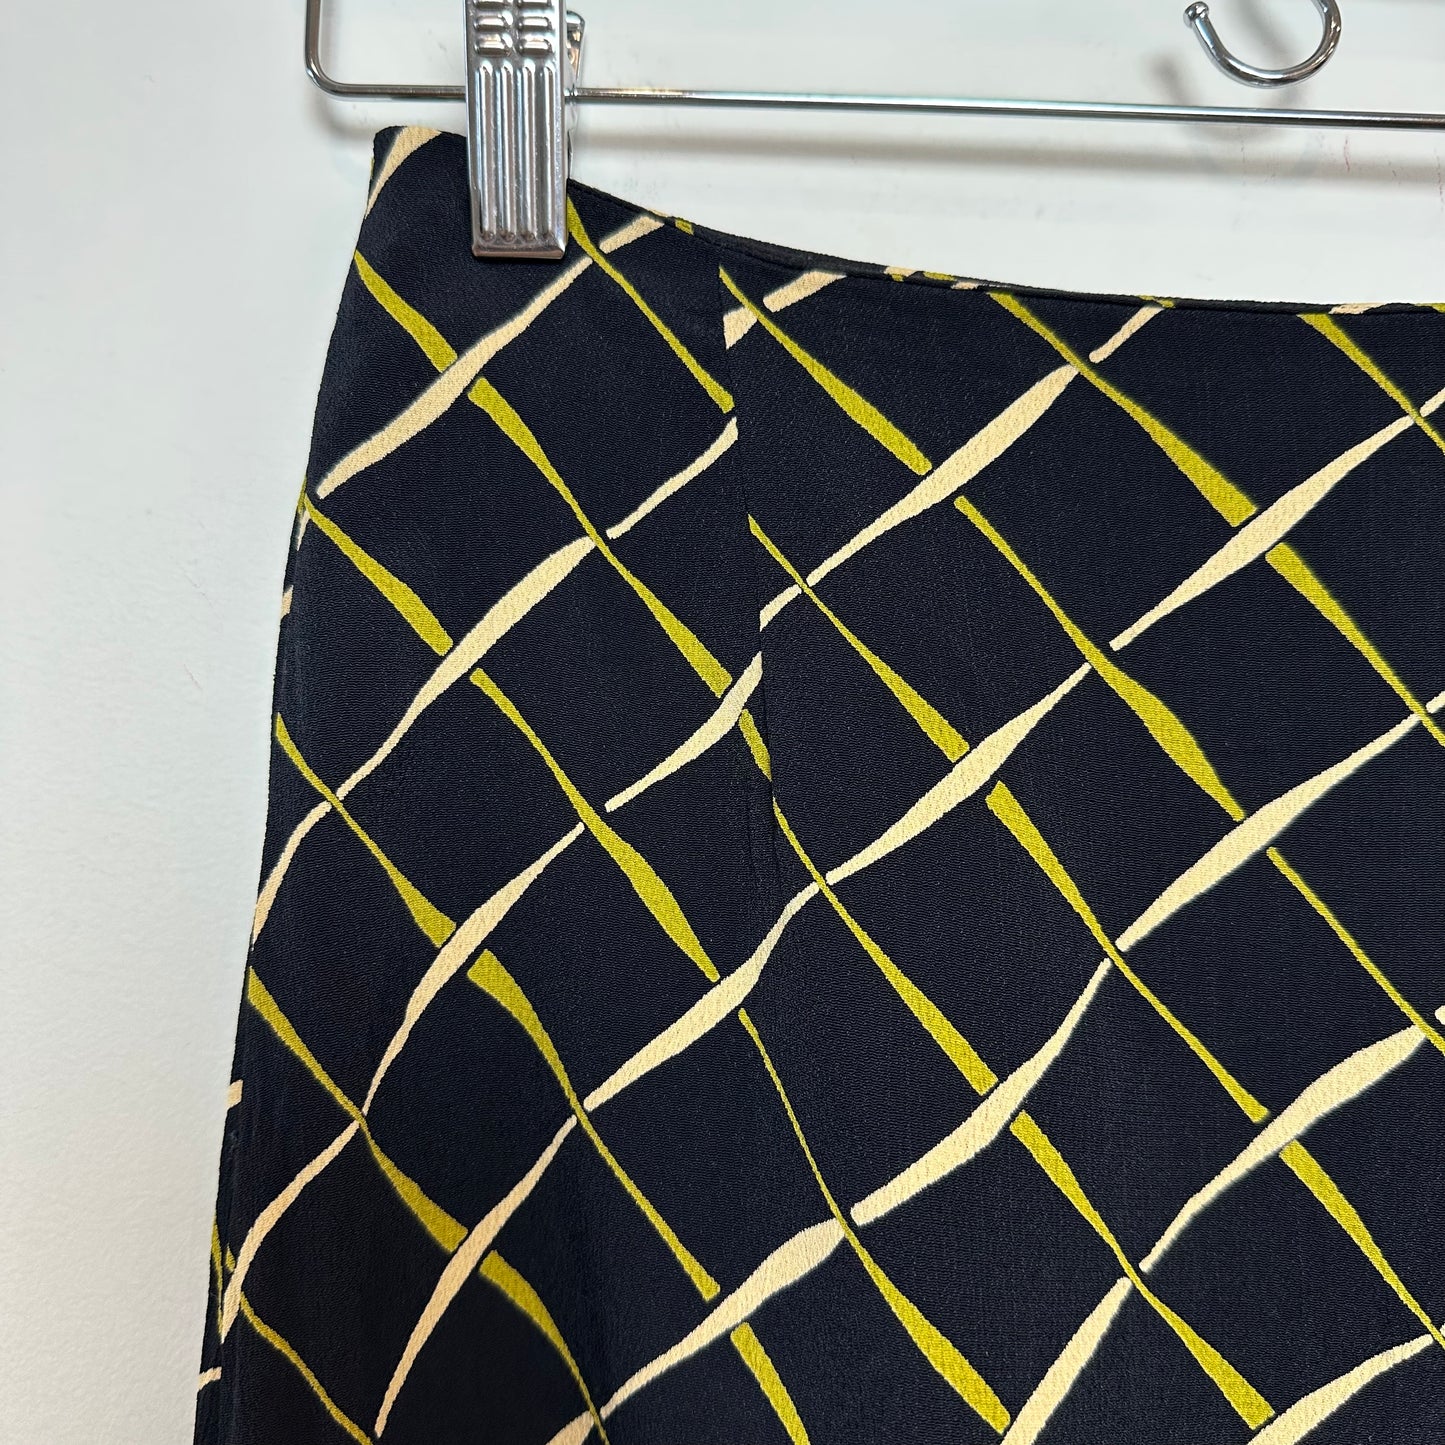 Vintage 90s Banana Republic Mini Skirt Black Patterned Checkered Rayon 4